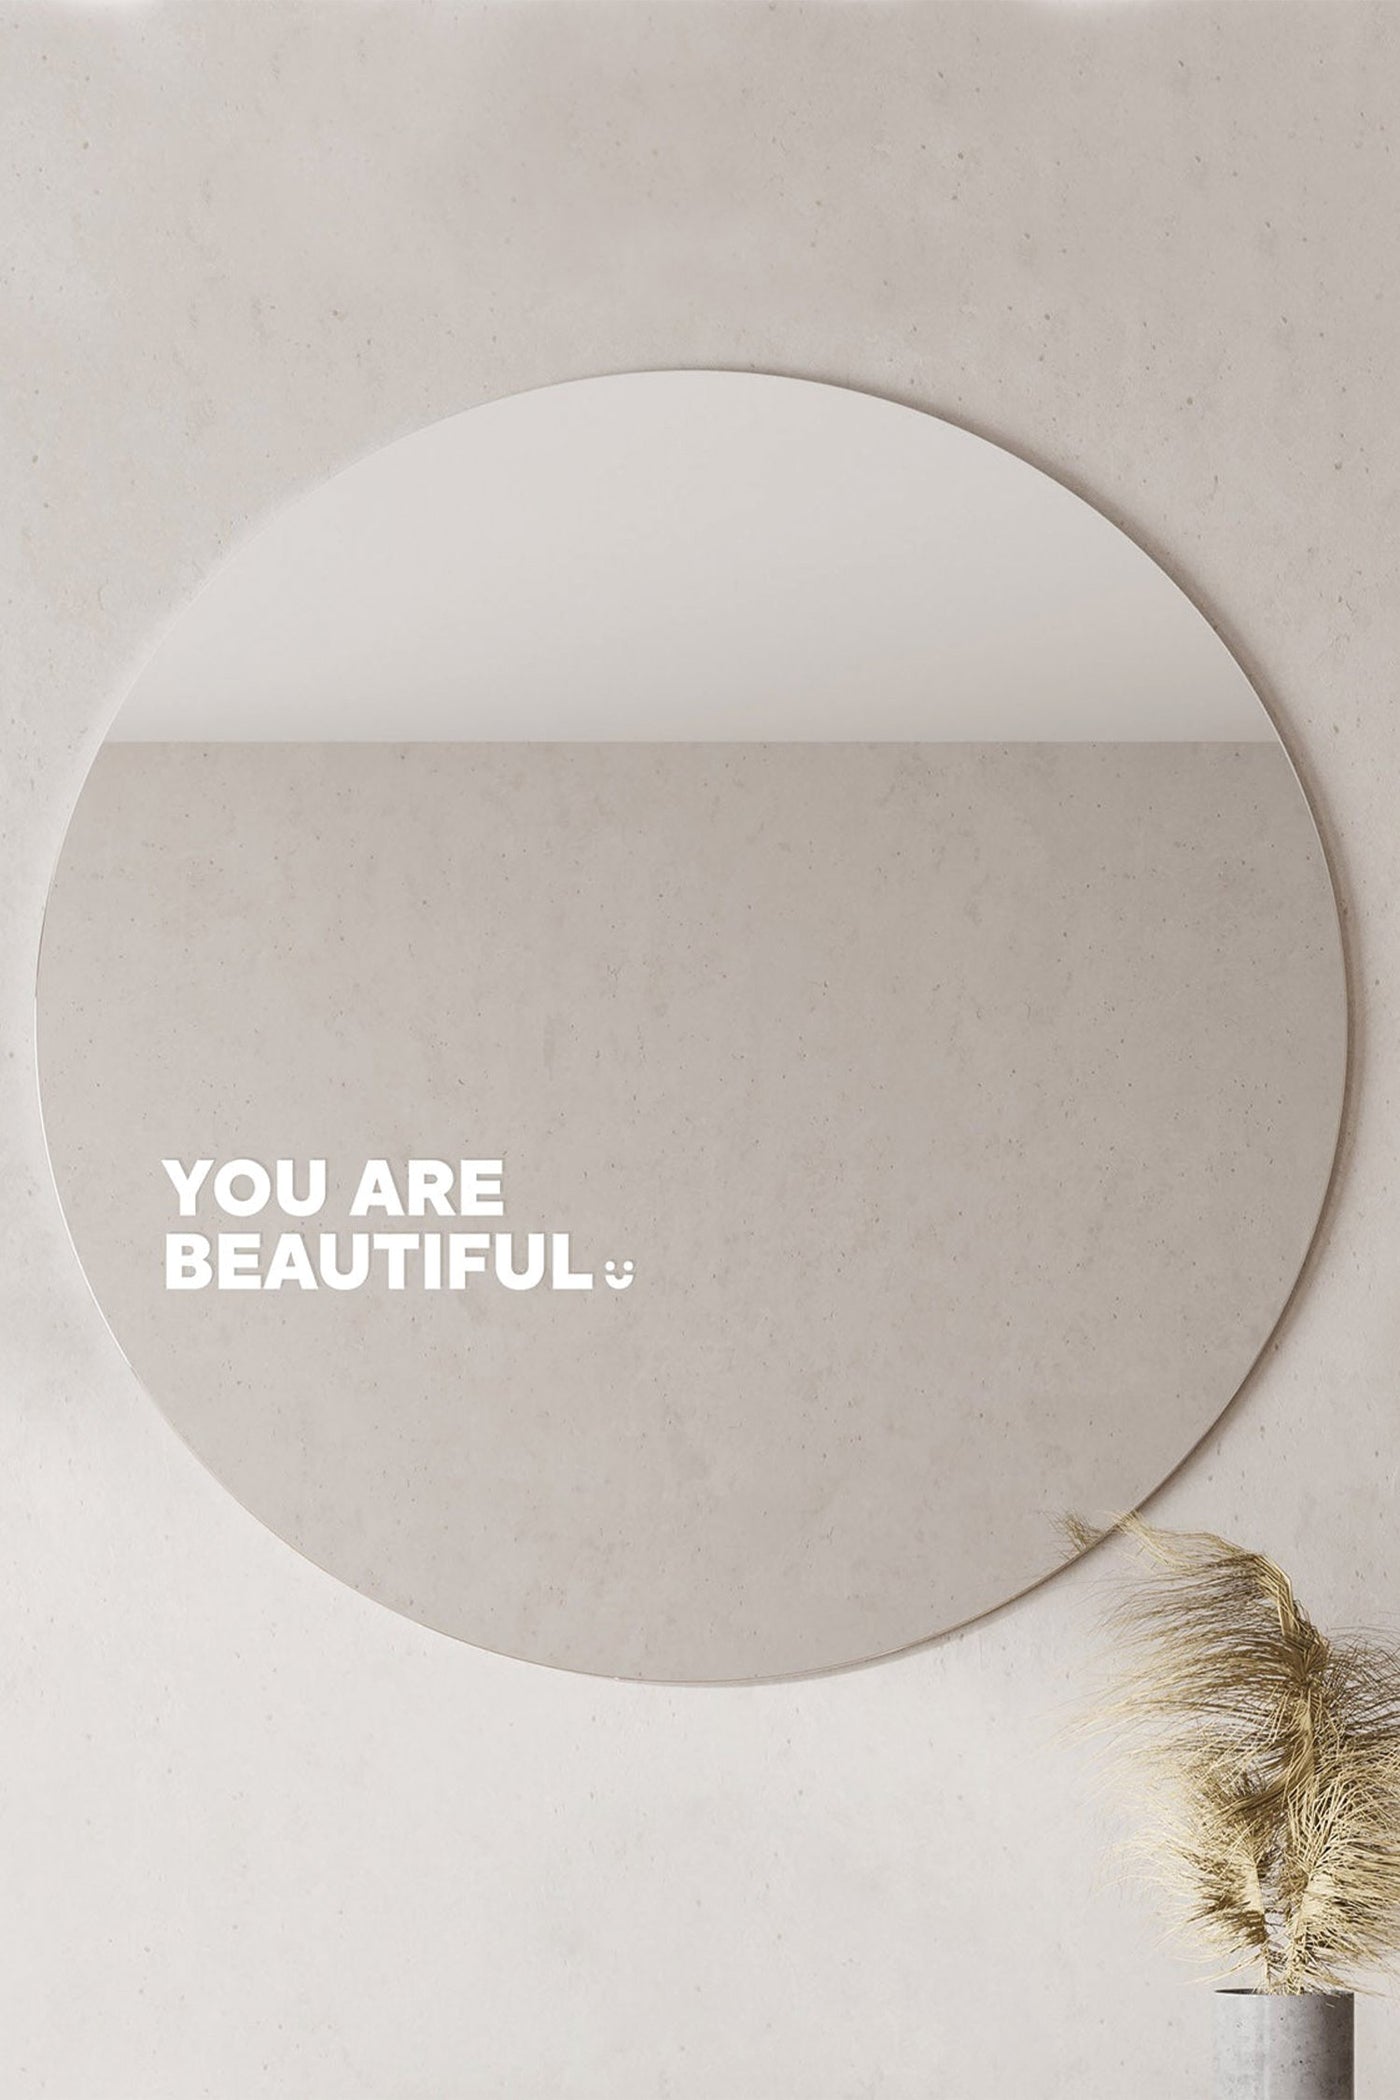 YOU ARE BEAUTIFUL. - Affirmation Mirror Sticker Affirmation Stickers Selfawear 